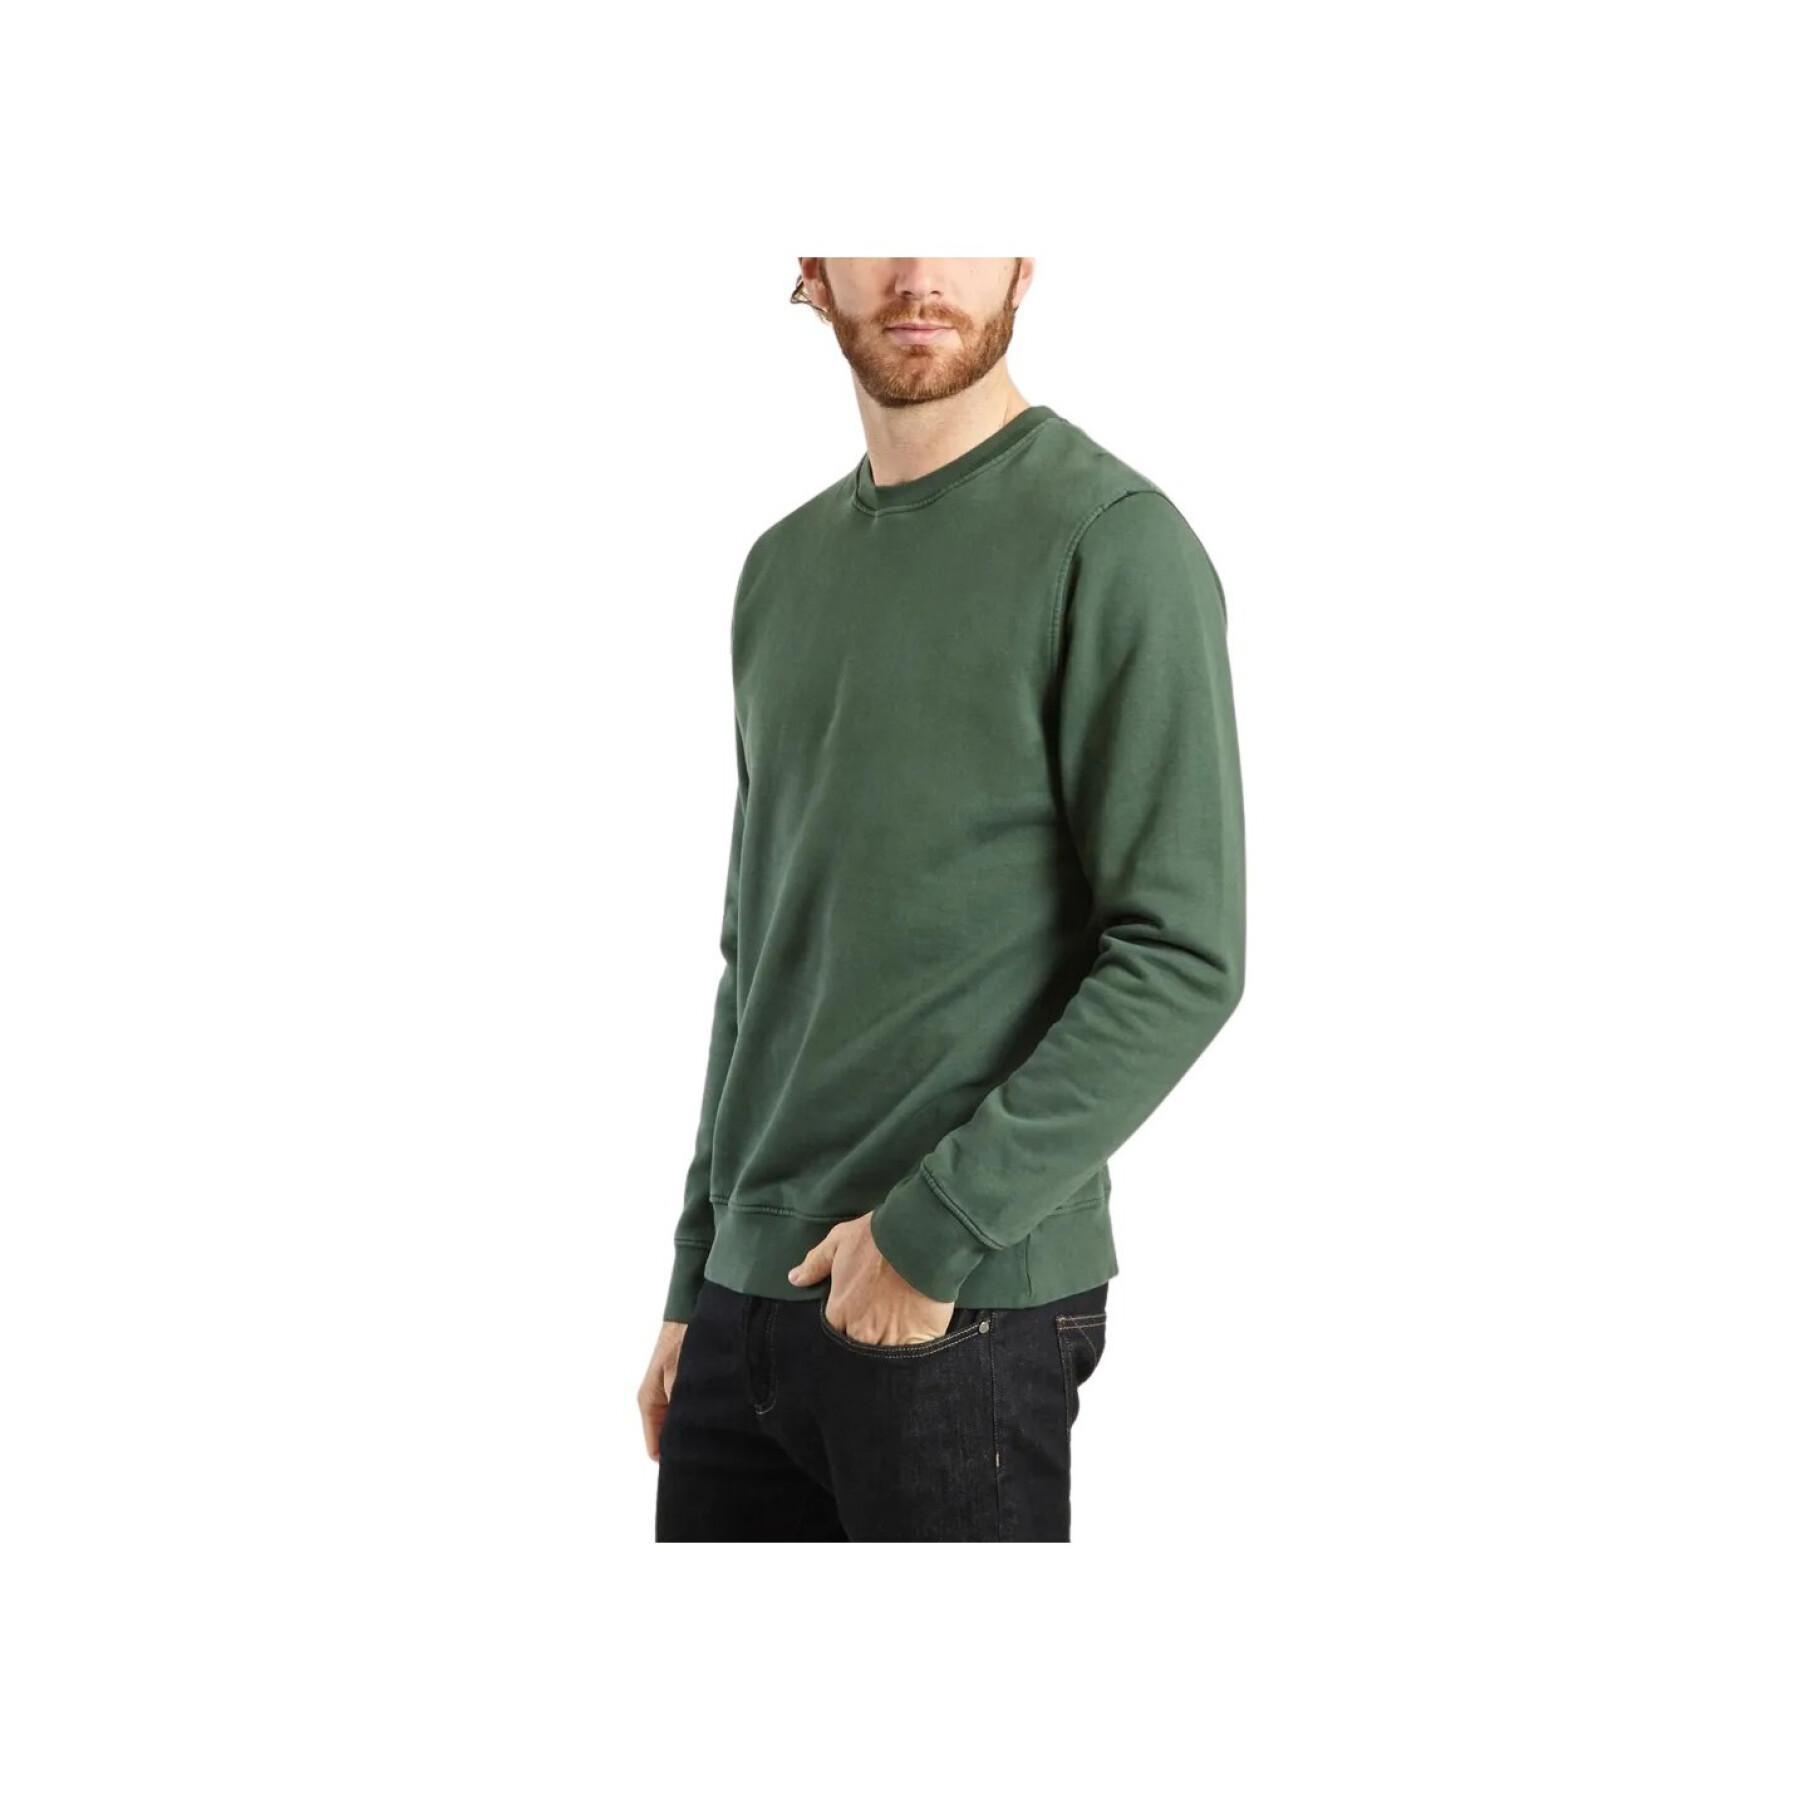 Sweatshirt mit Rundhalsausschnitt Colorful Standard Classic Organic emerald green